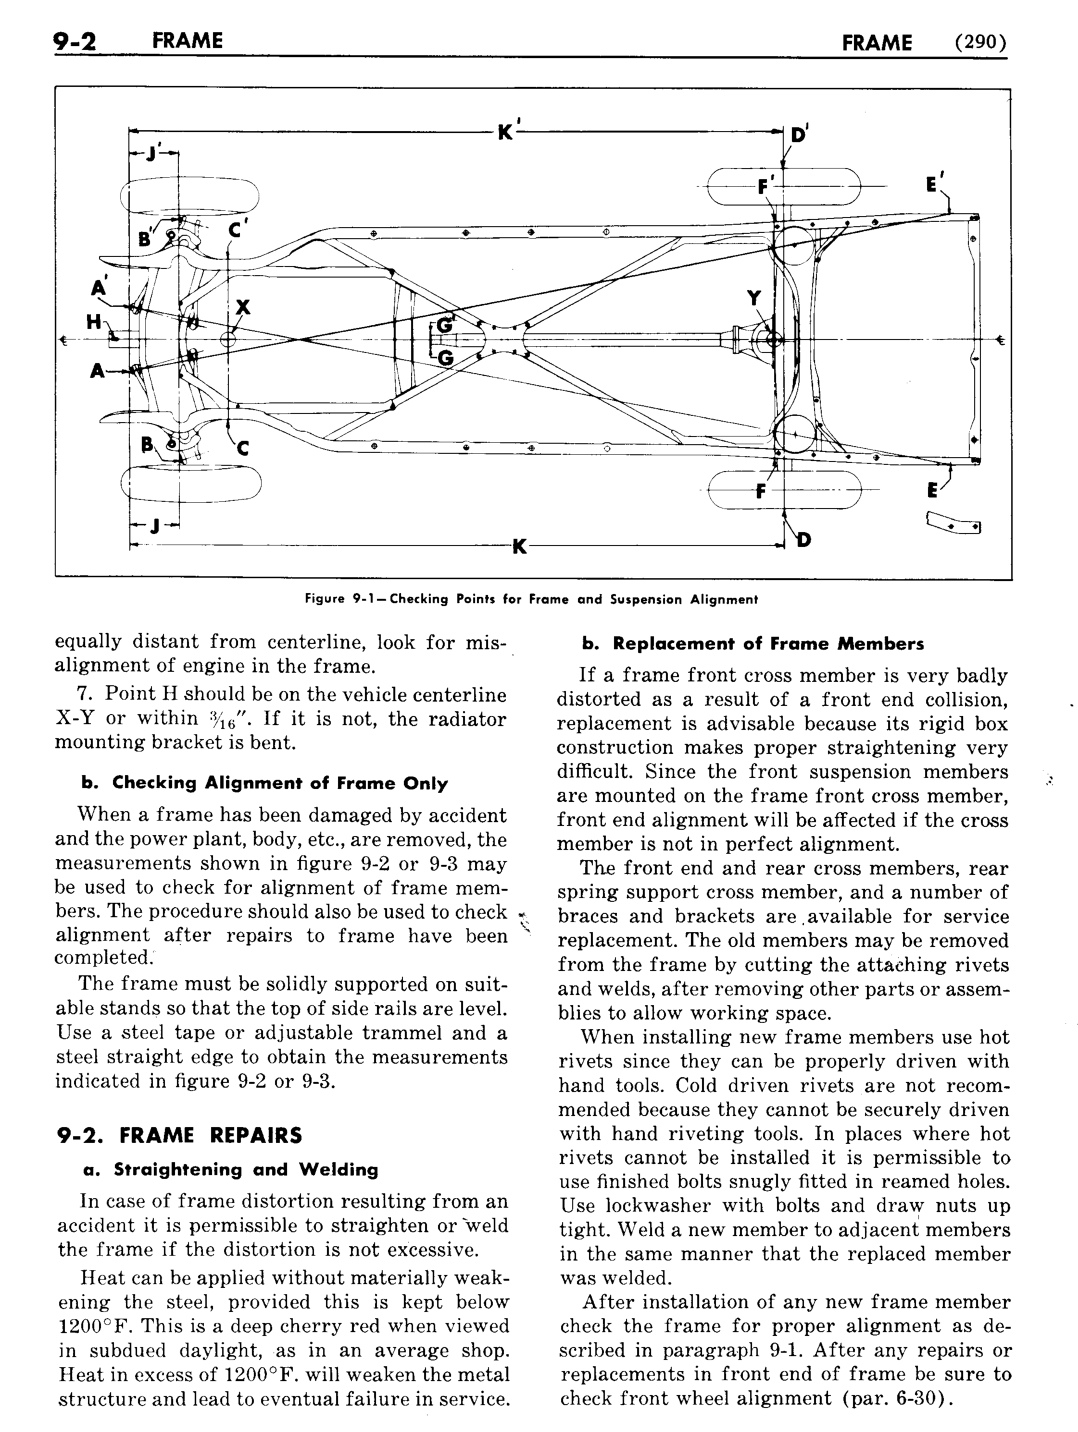 n_10 1951 Buick Shop Manual - Frame-002-002.jpg